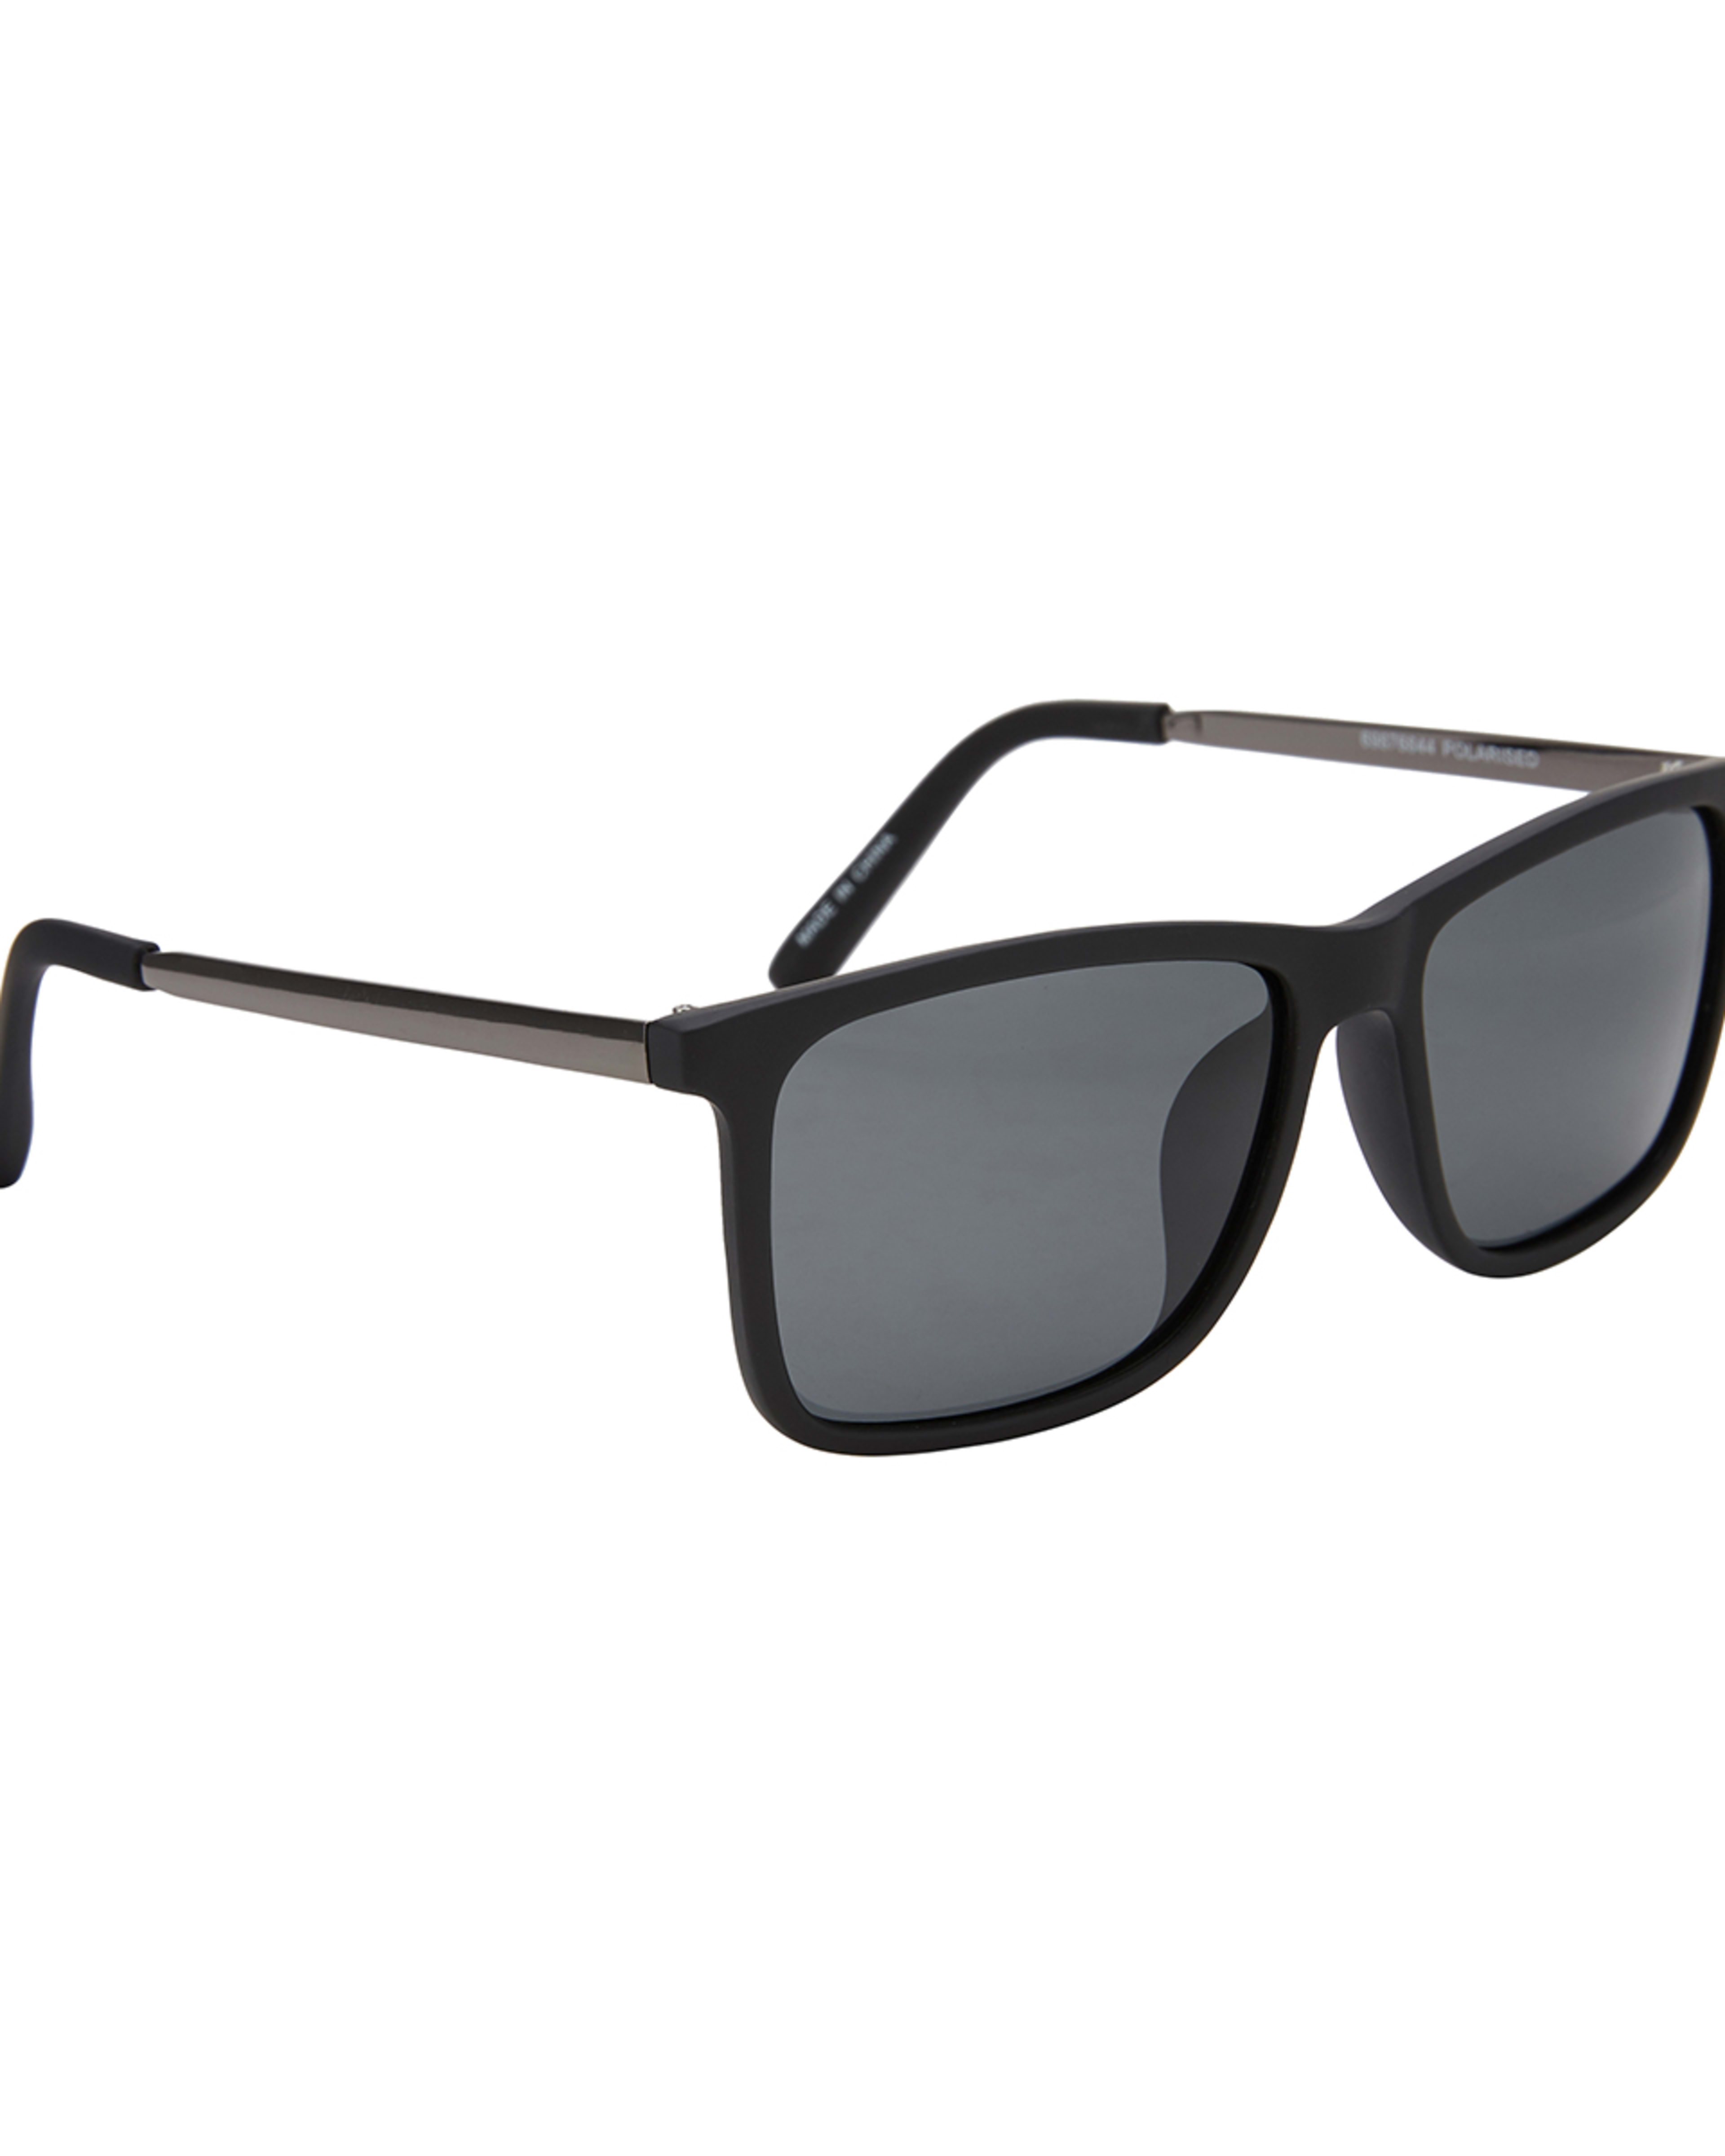 Mens Square Frame Sunglasses - Kmart